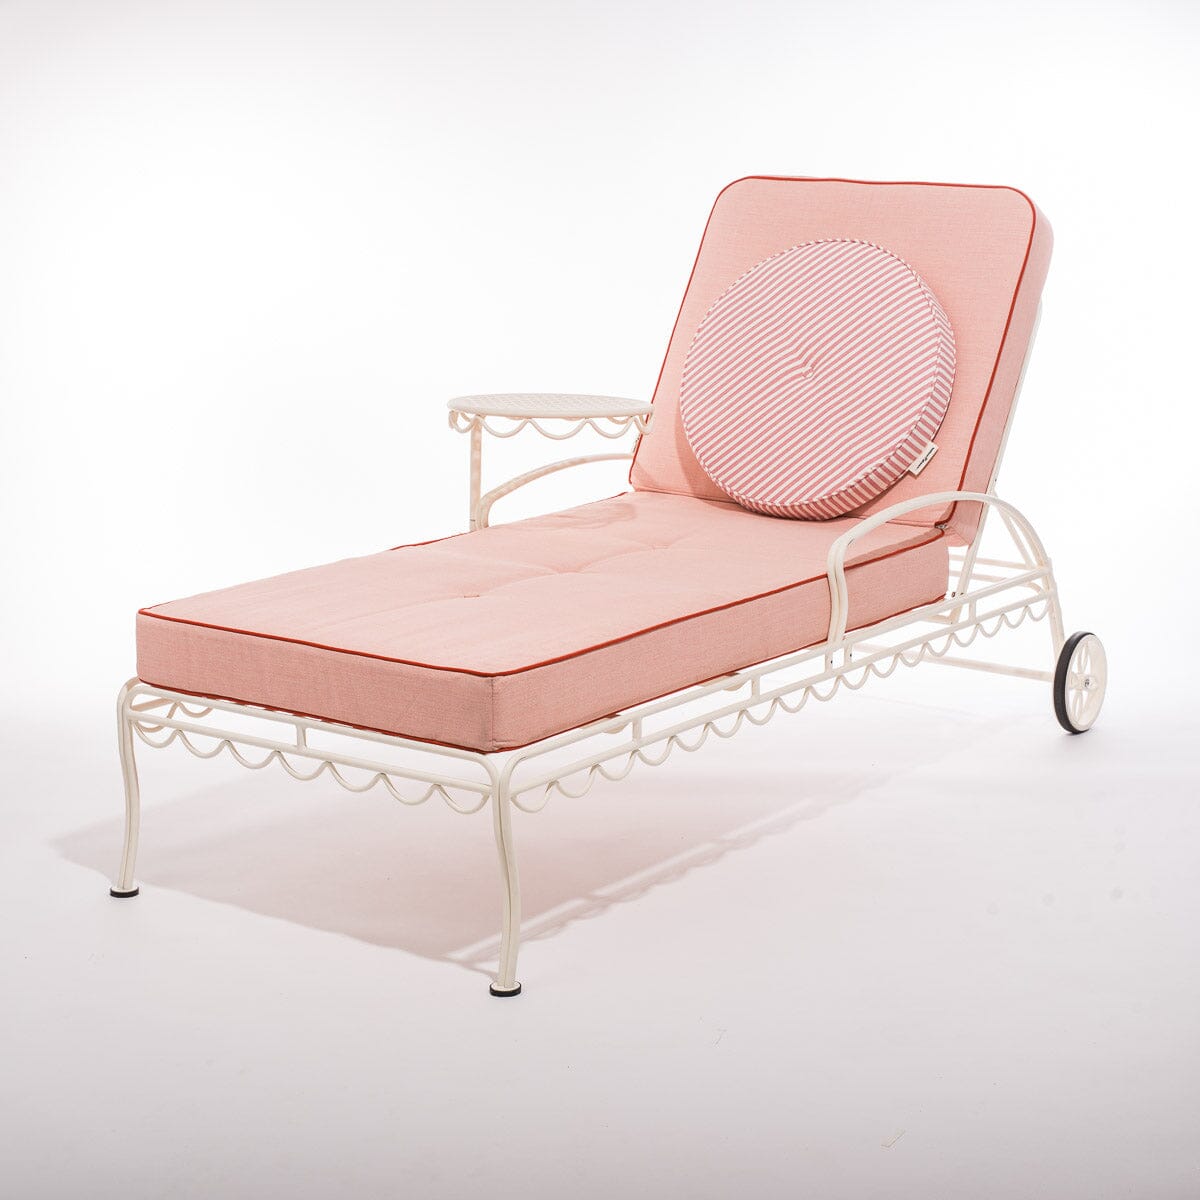 The Circular Pillow - Laurens Pink Stripe Circular Pillow Business & Pleasure Co 